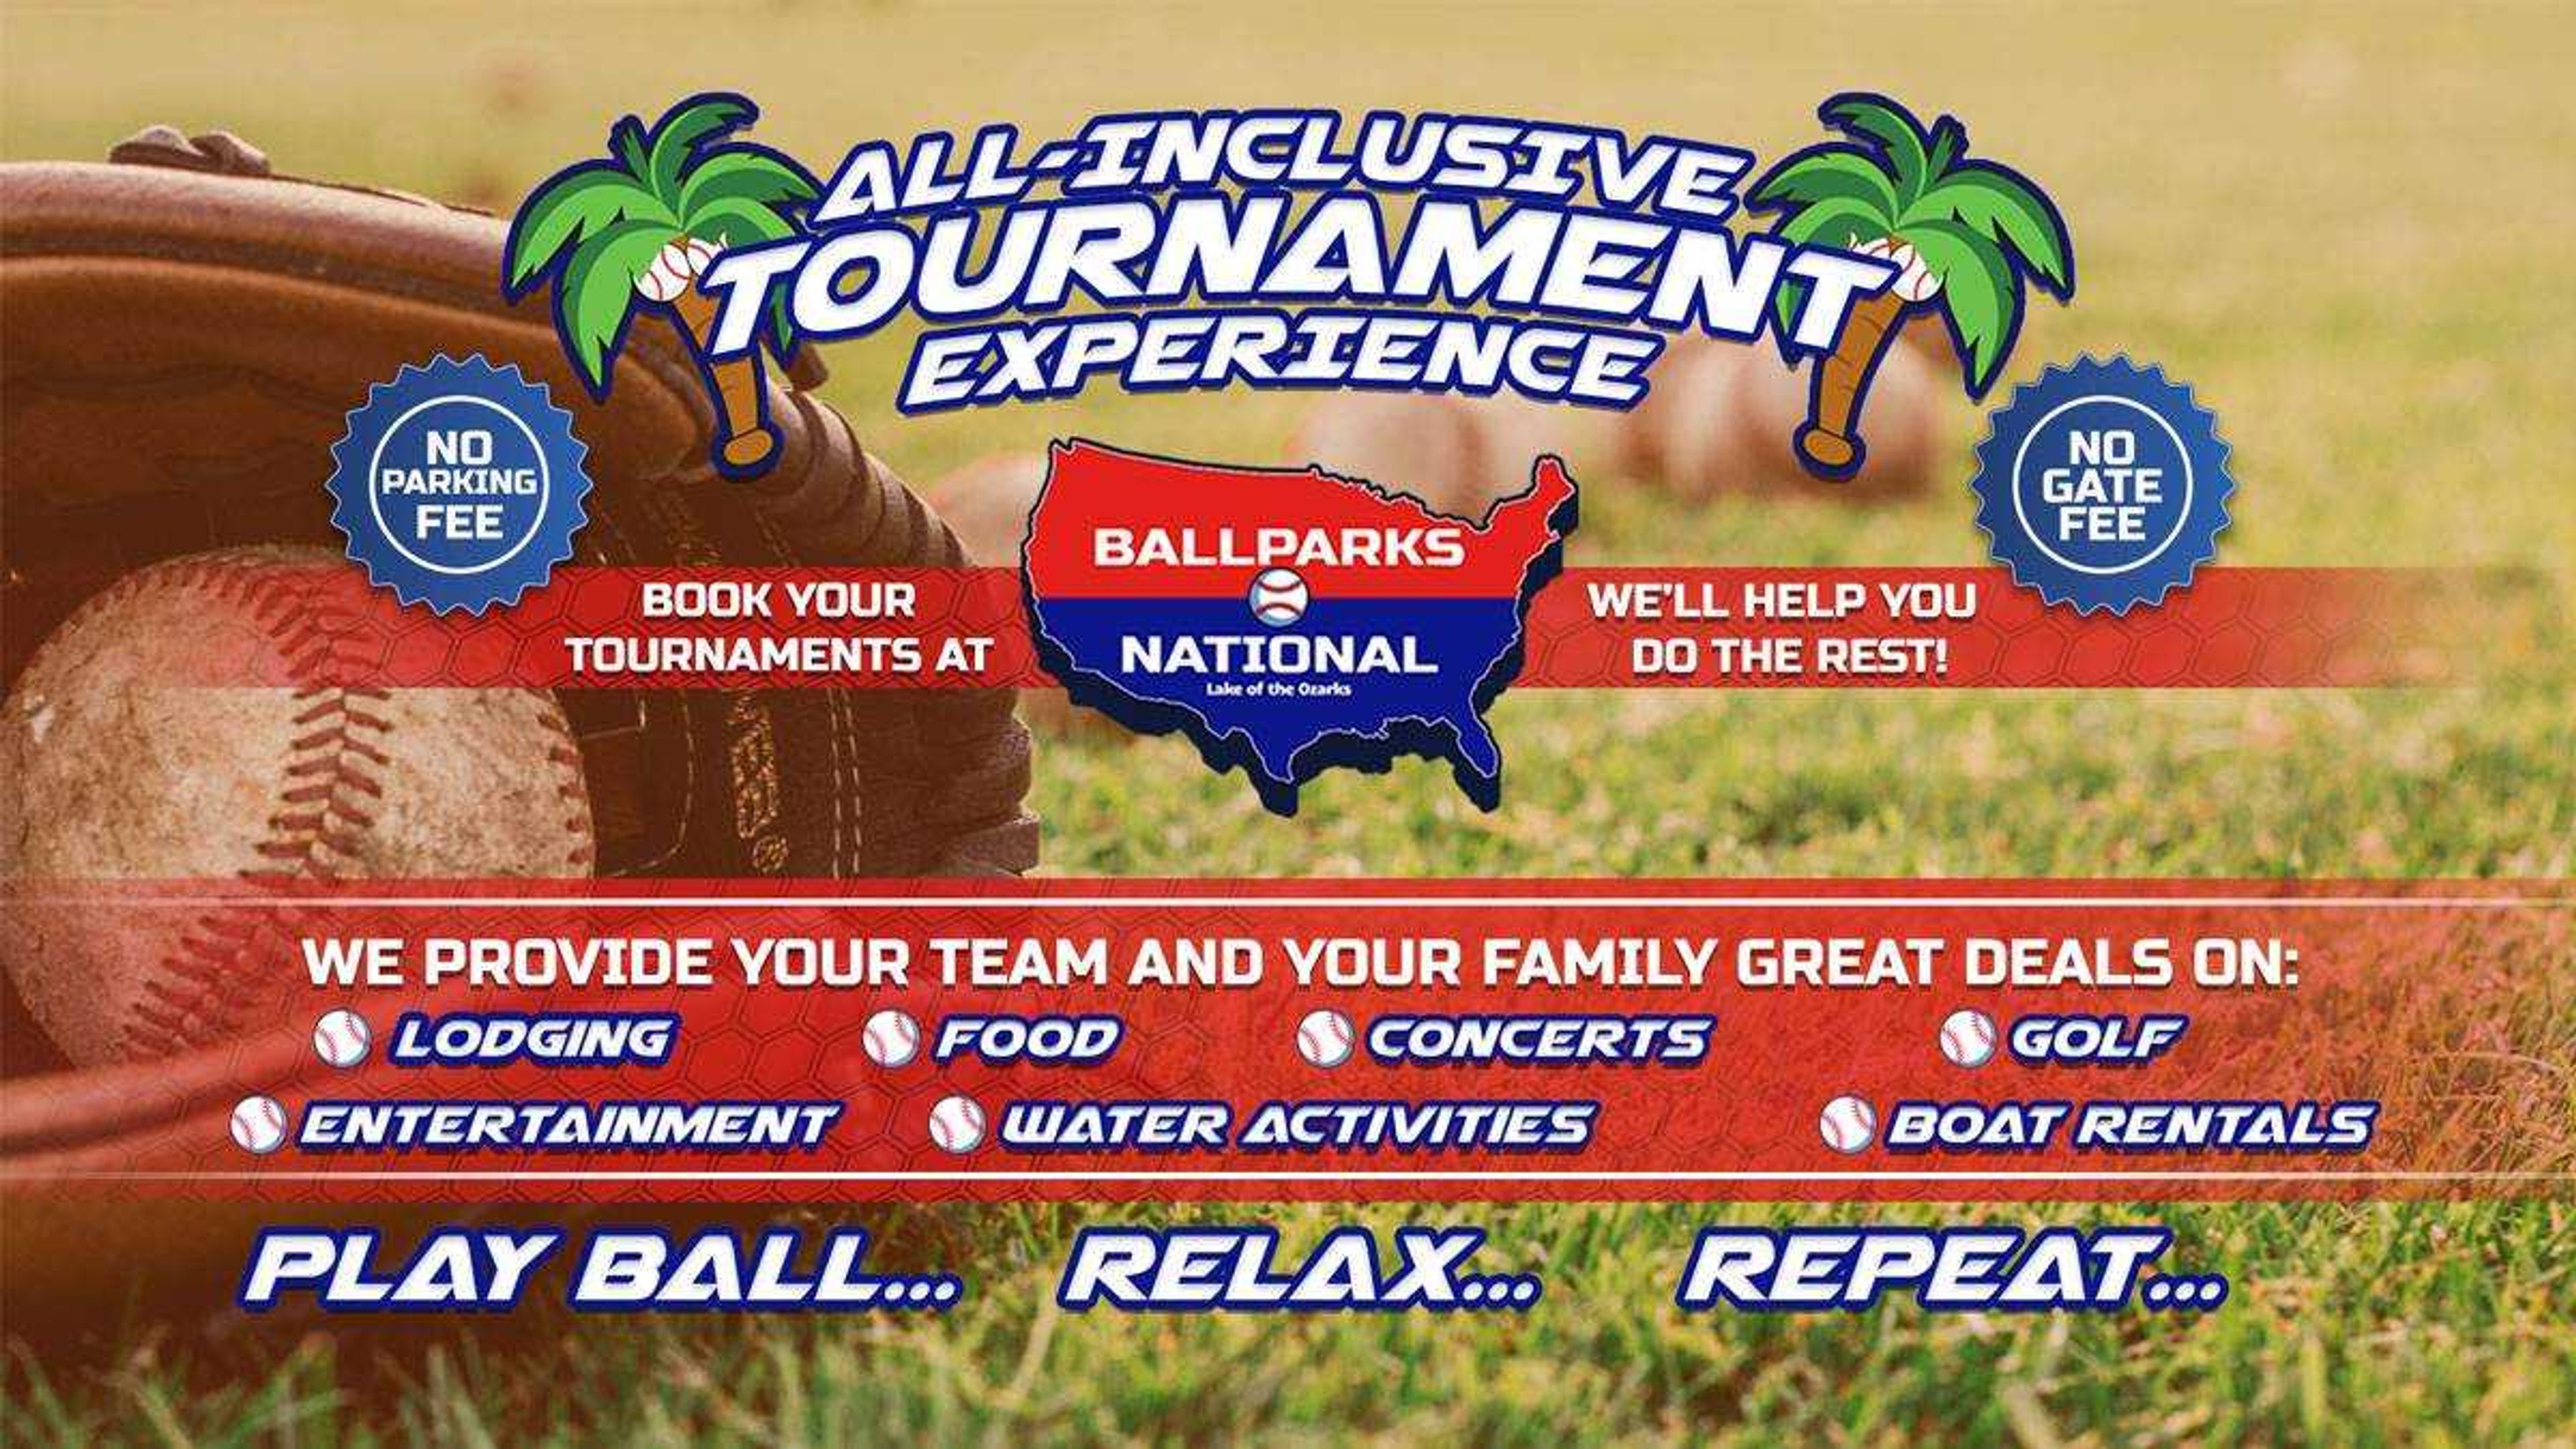 Ballparks national’s logo from their website